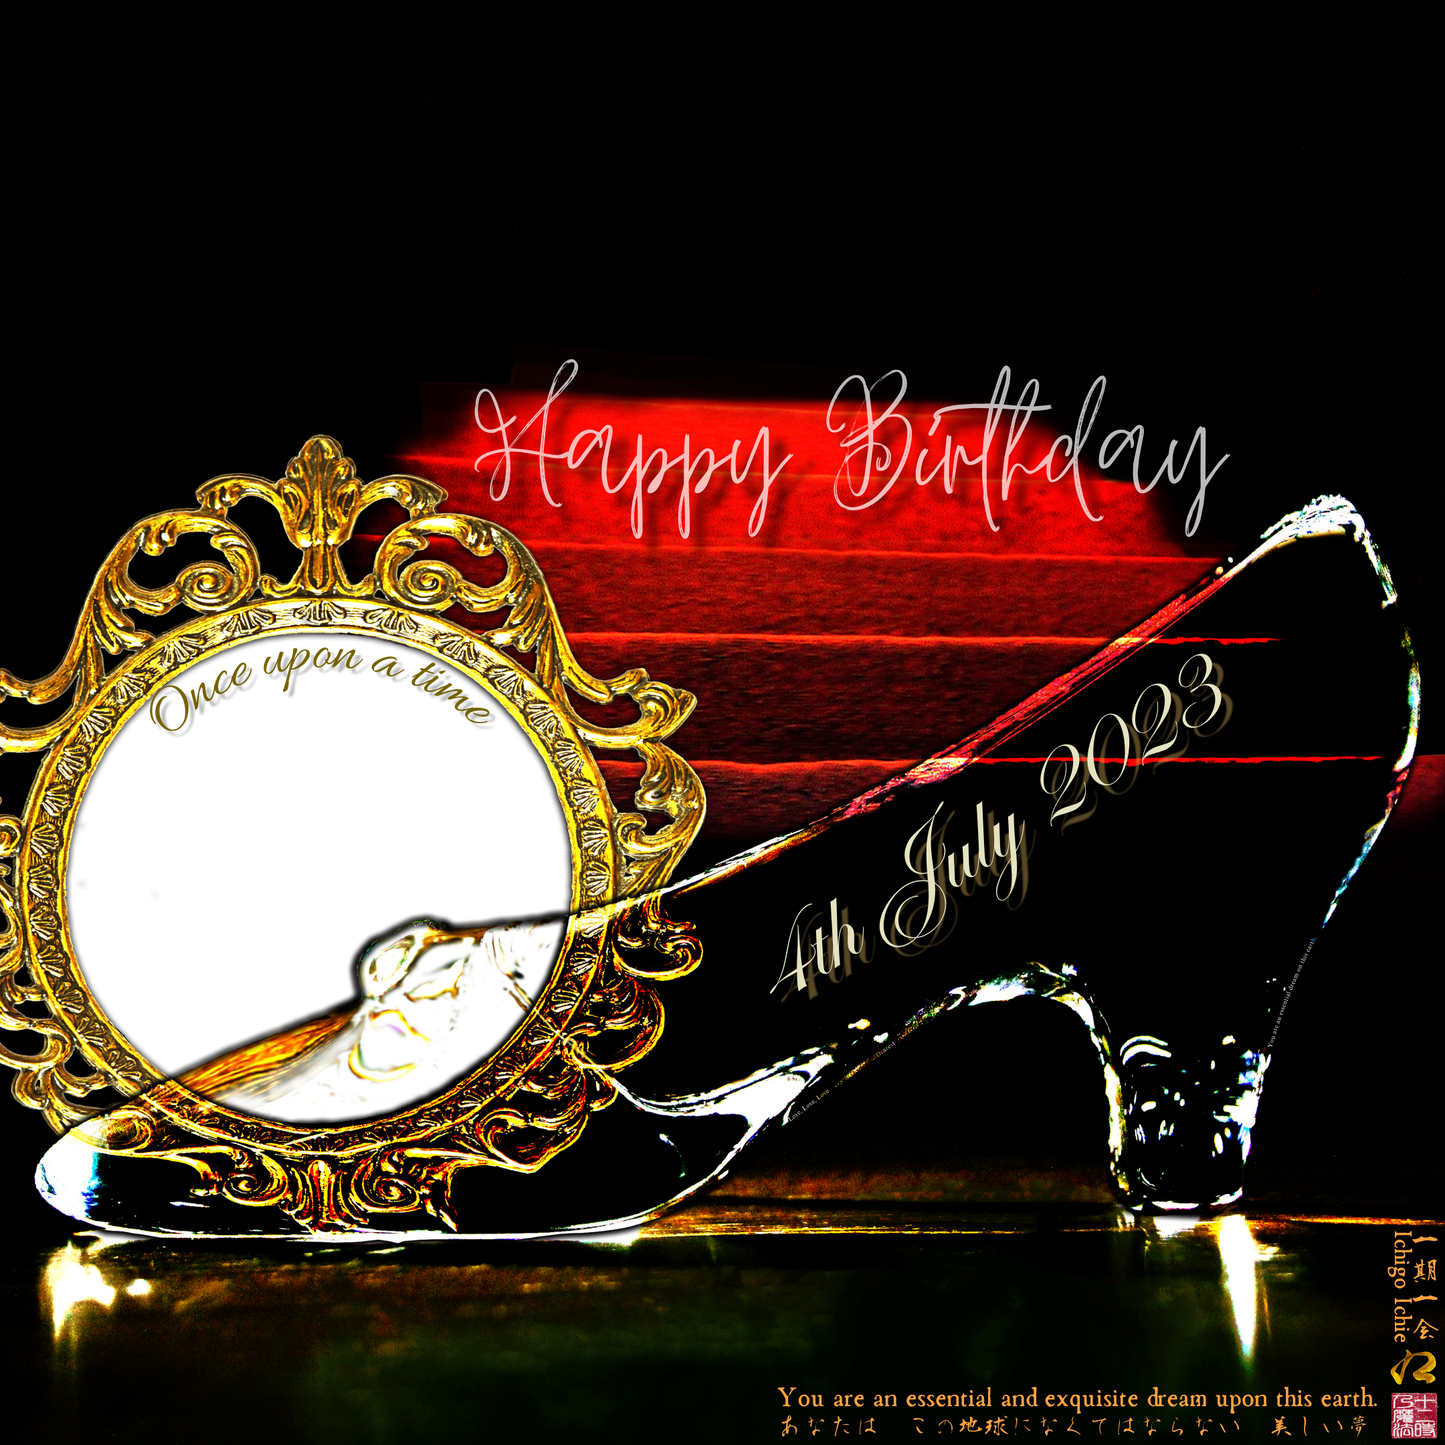 Happy Birthday Glass Slipper "Ichigo Ichie" 4th July 2023 the Left (1-of-1) NFT Art